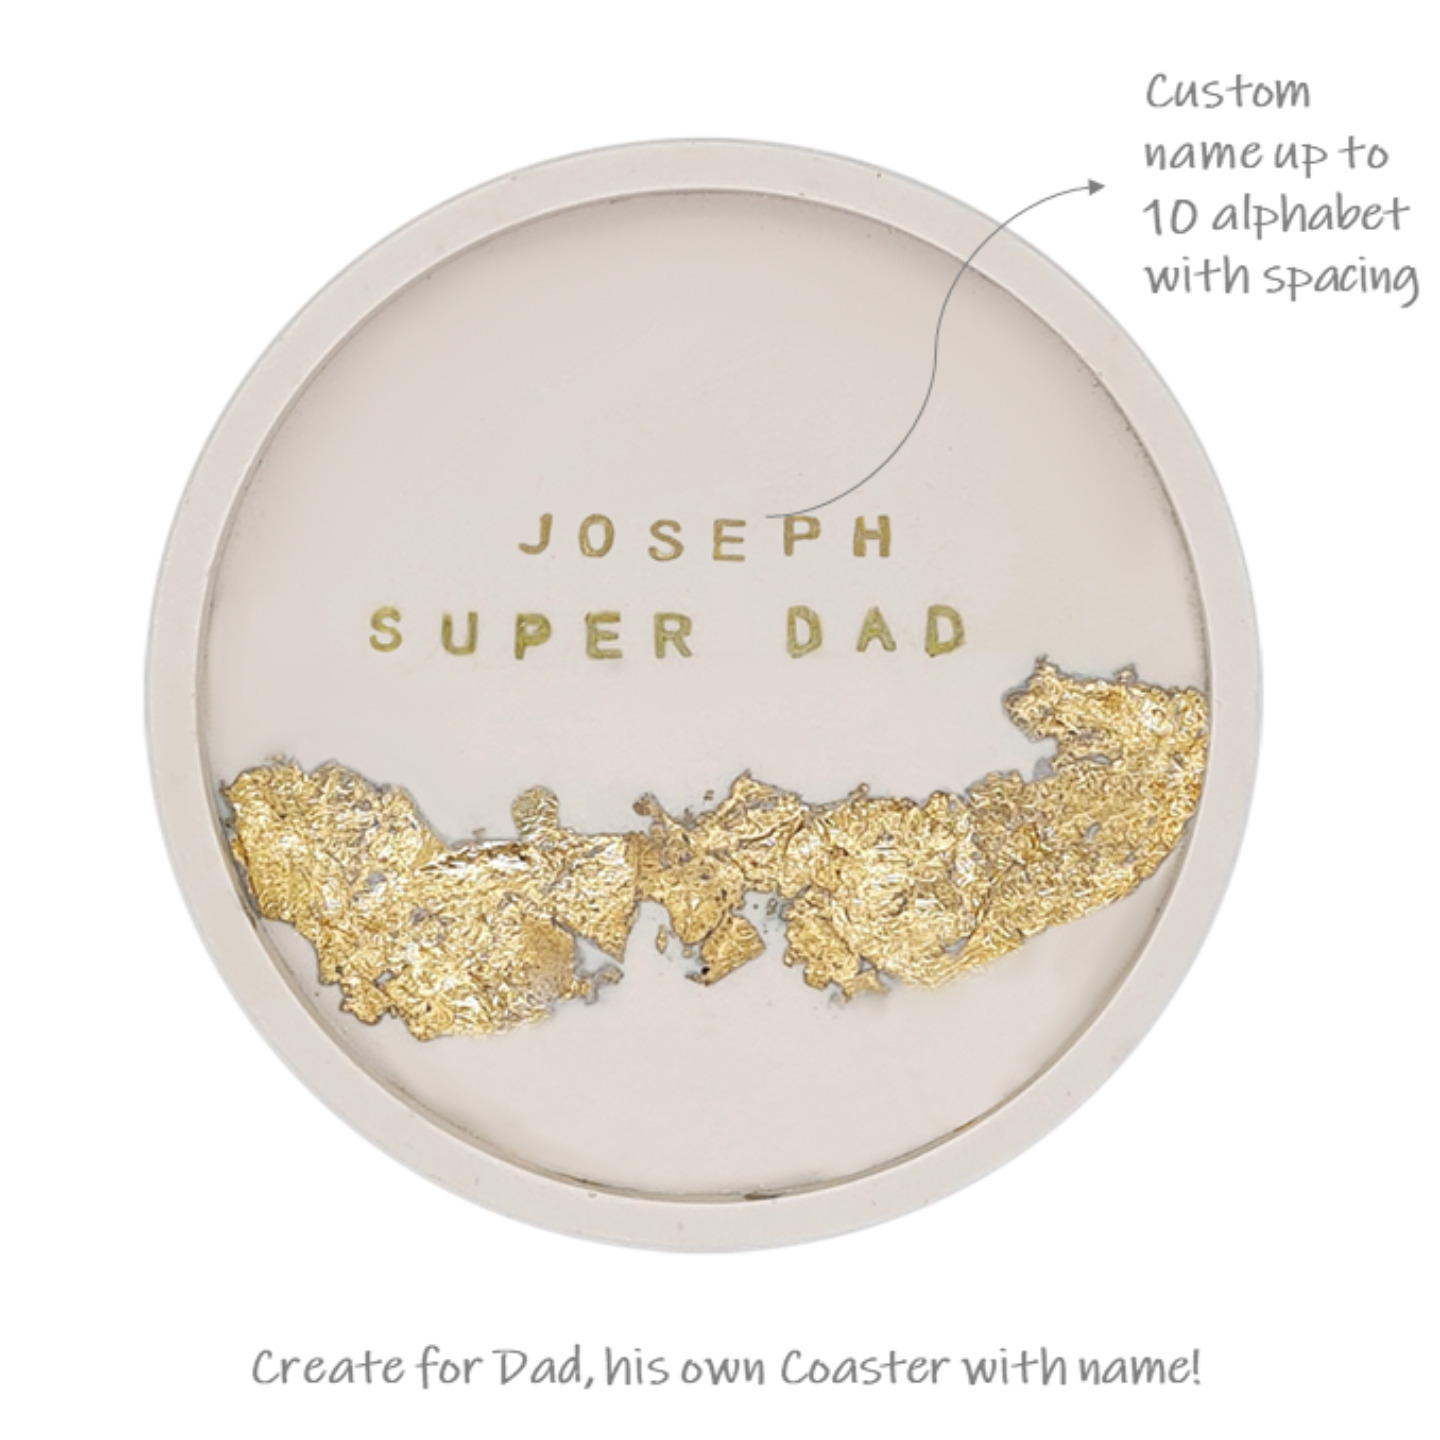 SUPER DAD Jesmonite Coaster  Paper weight  Custom name gold stamping